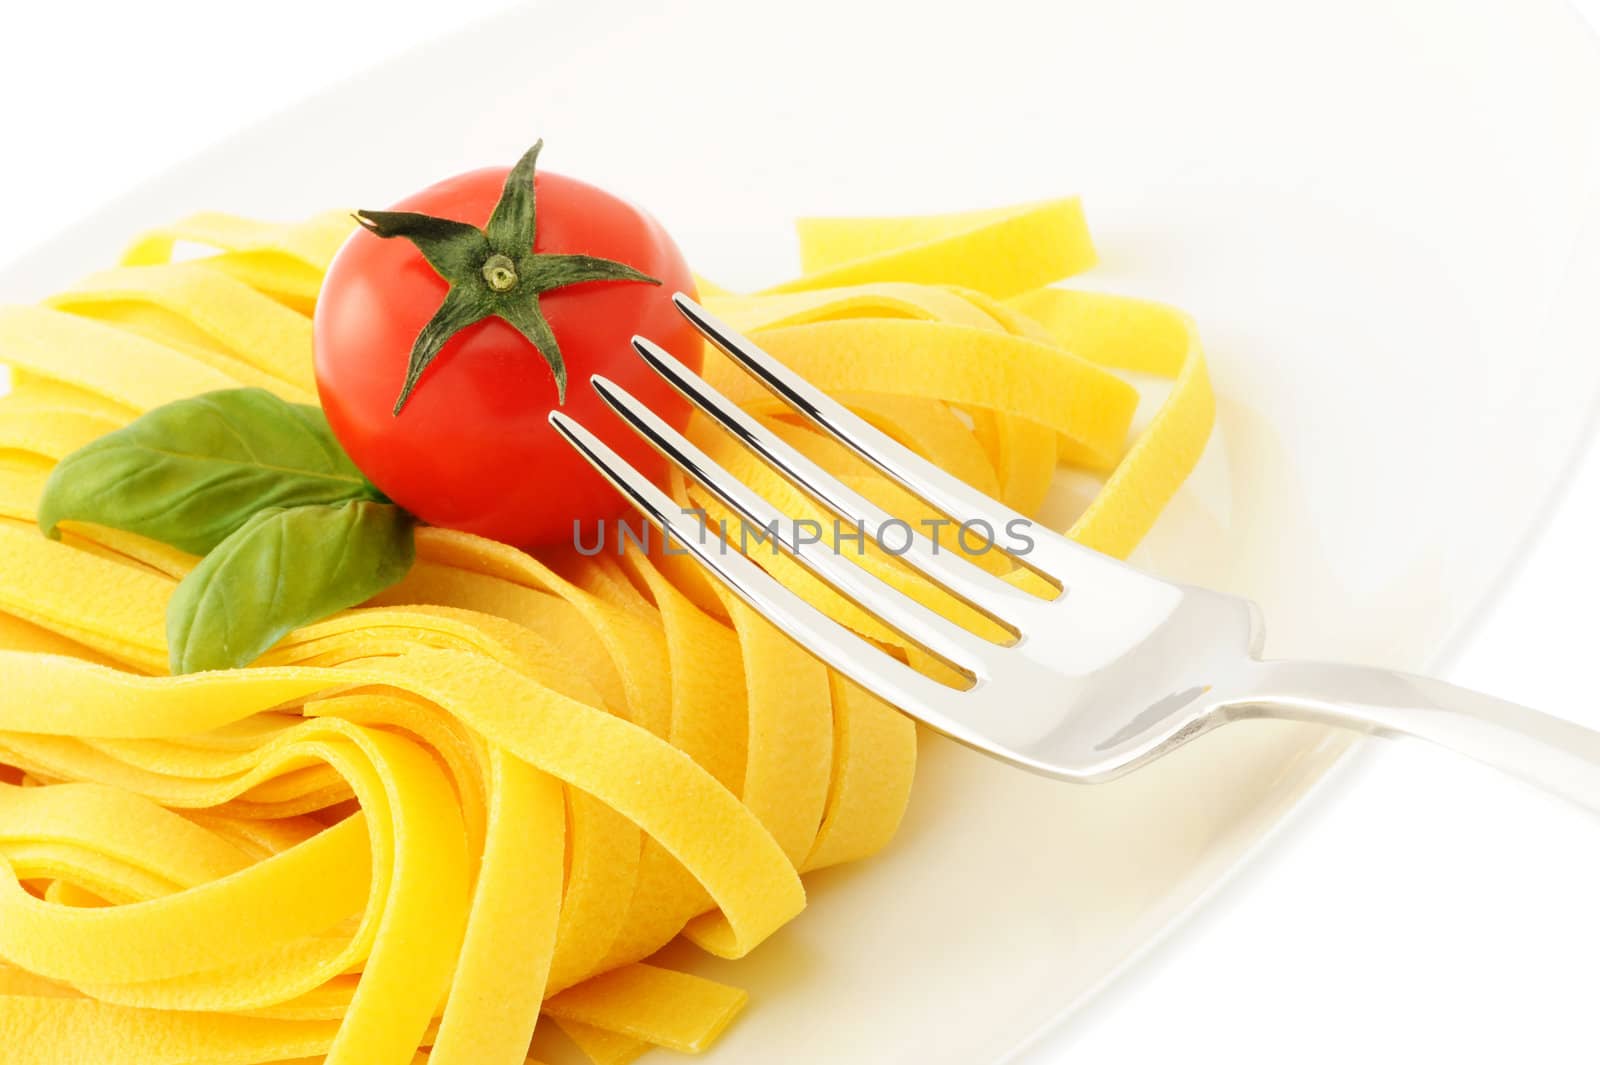 Italian pasta dish, close up